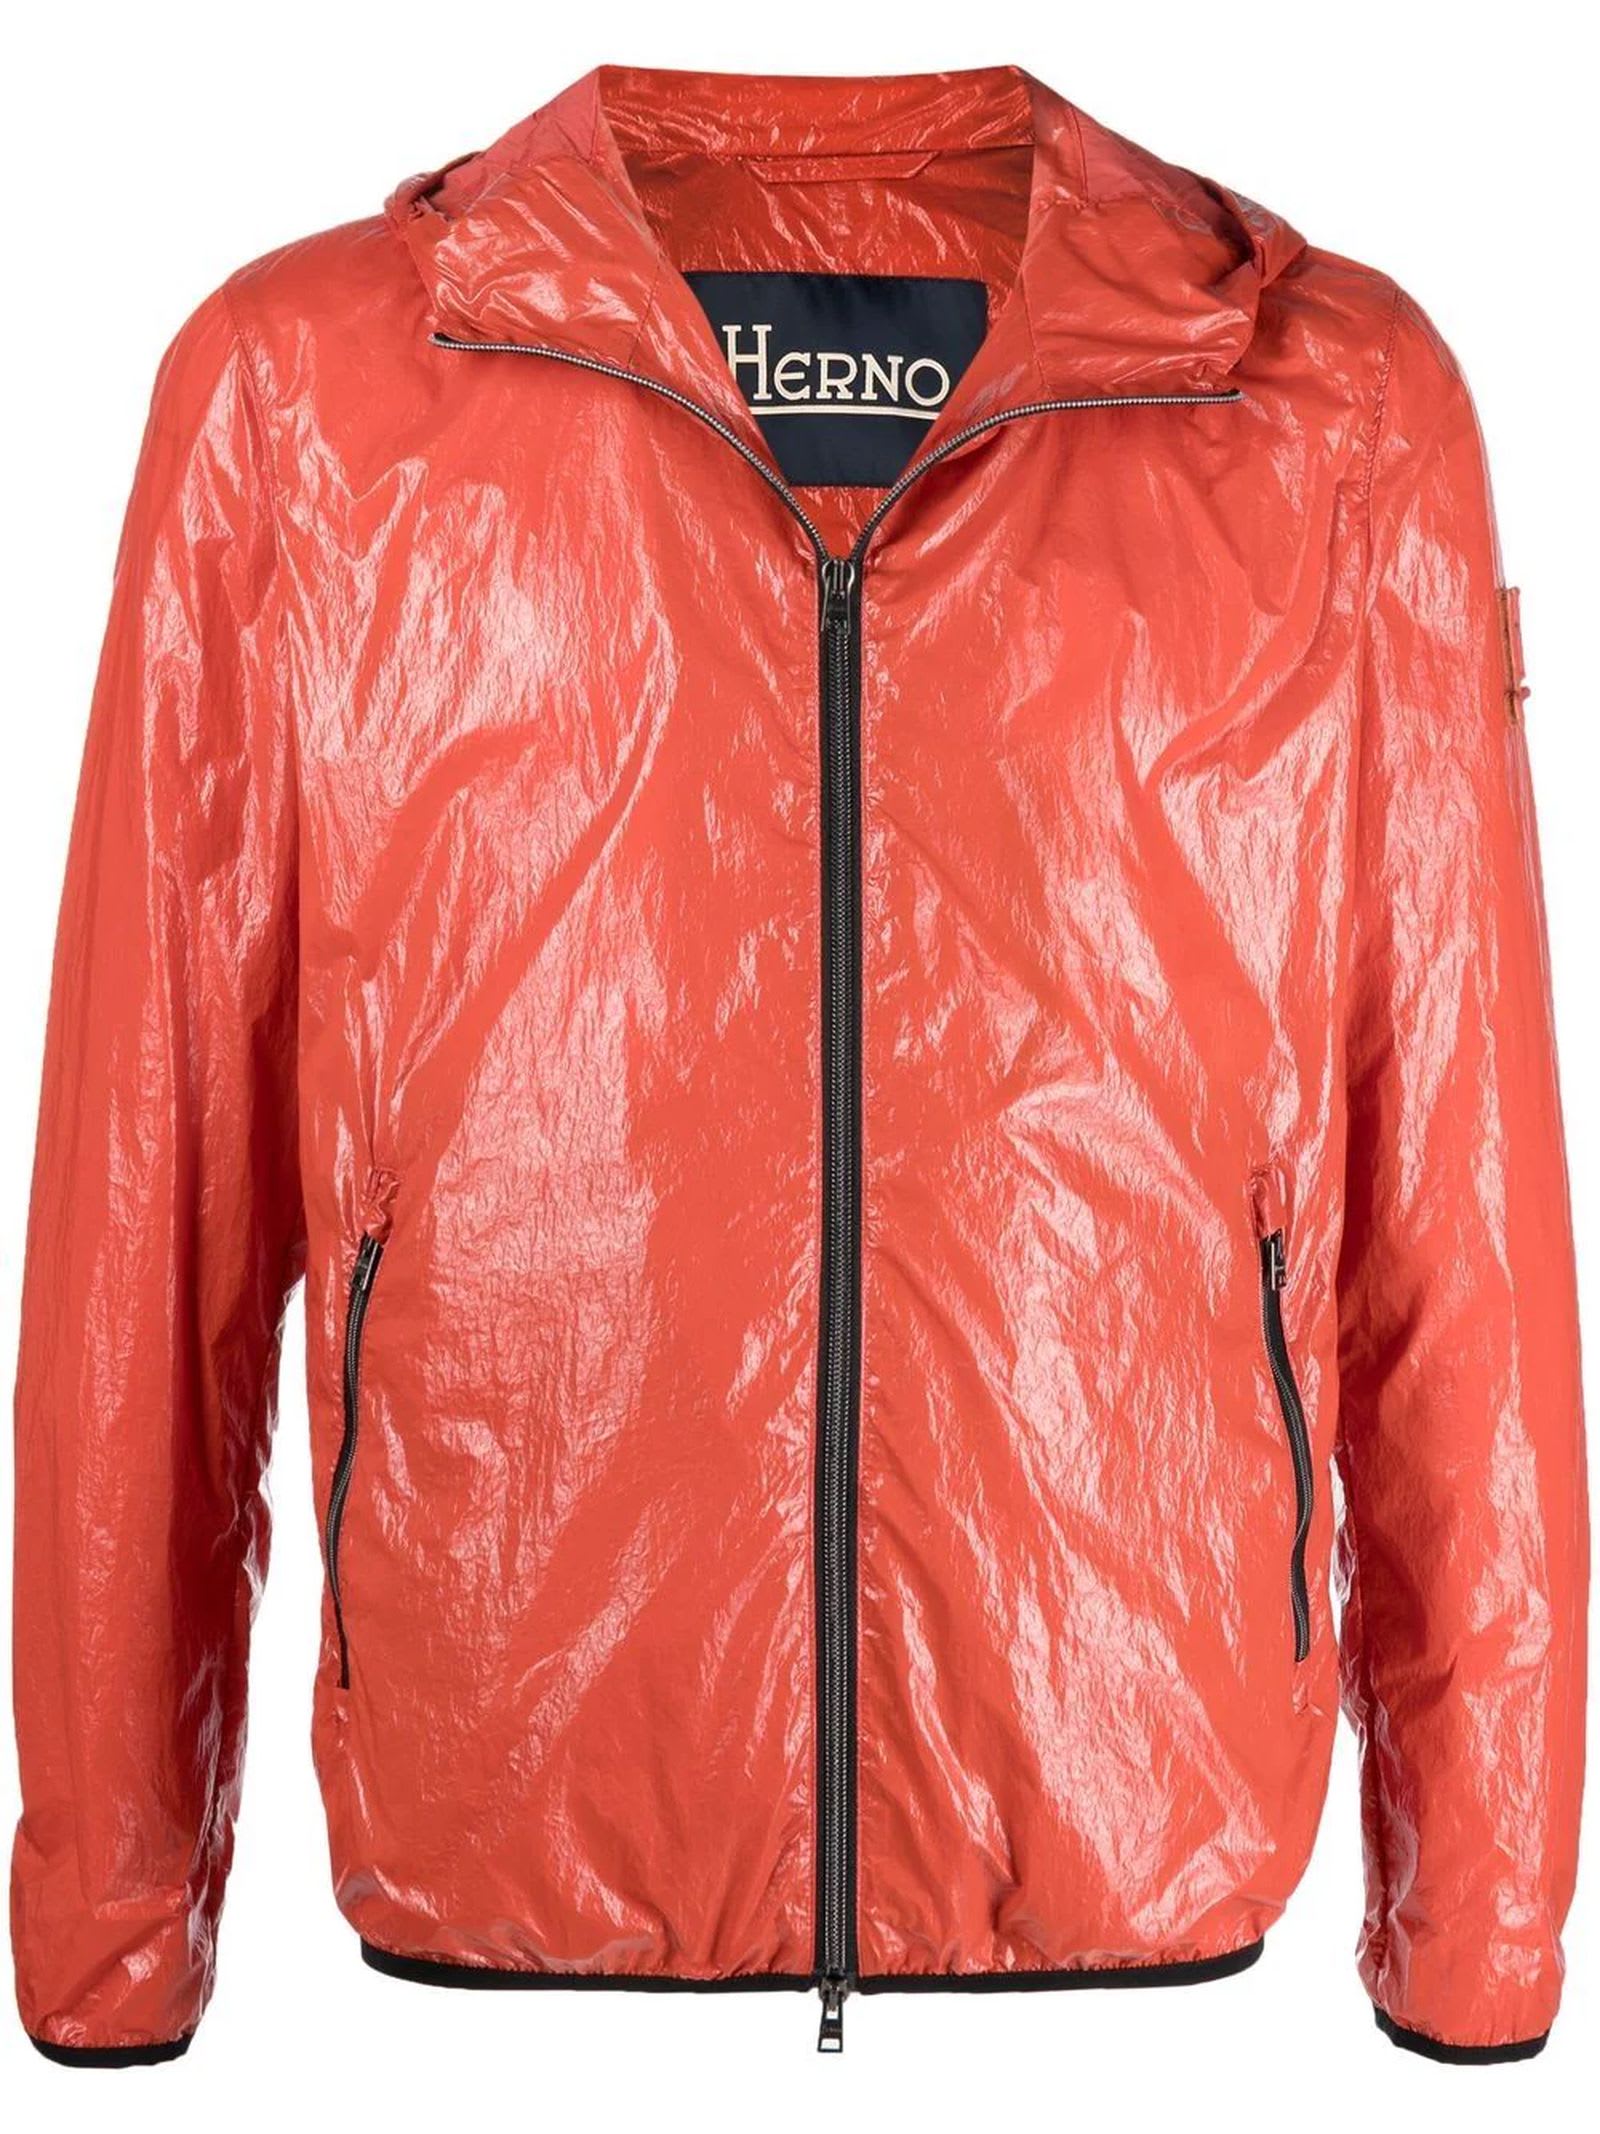 Herno Orange Rain Jacket